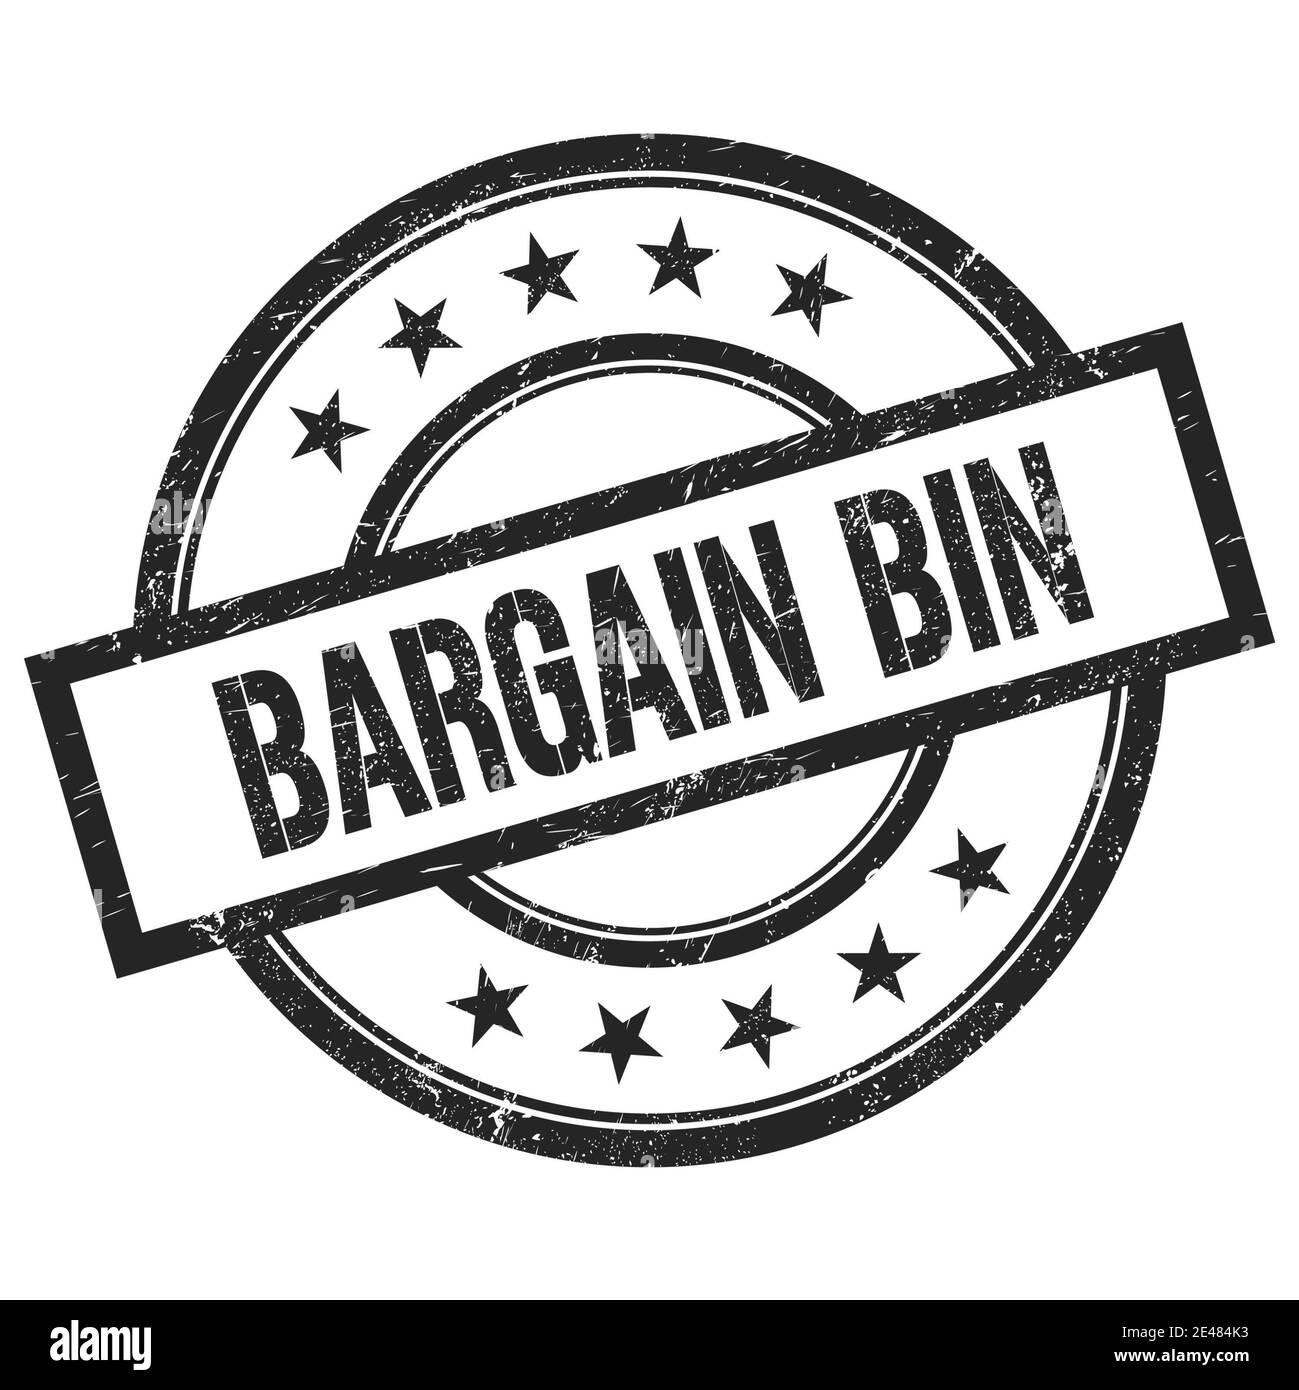 BARGAIN BIN text written on black round vintage rubber stamp. Stock Photo